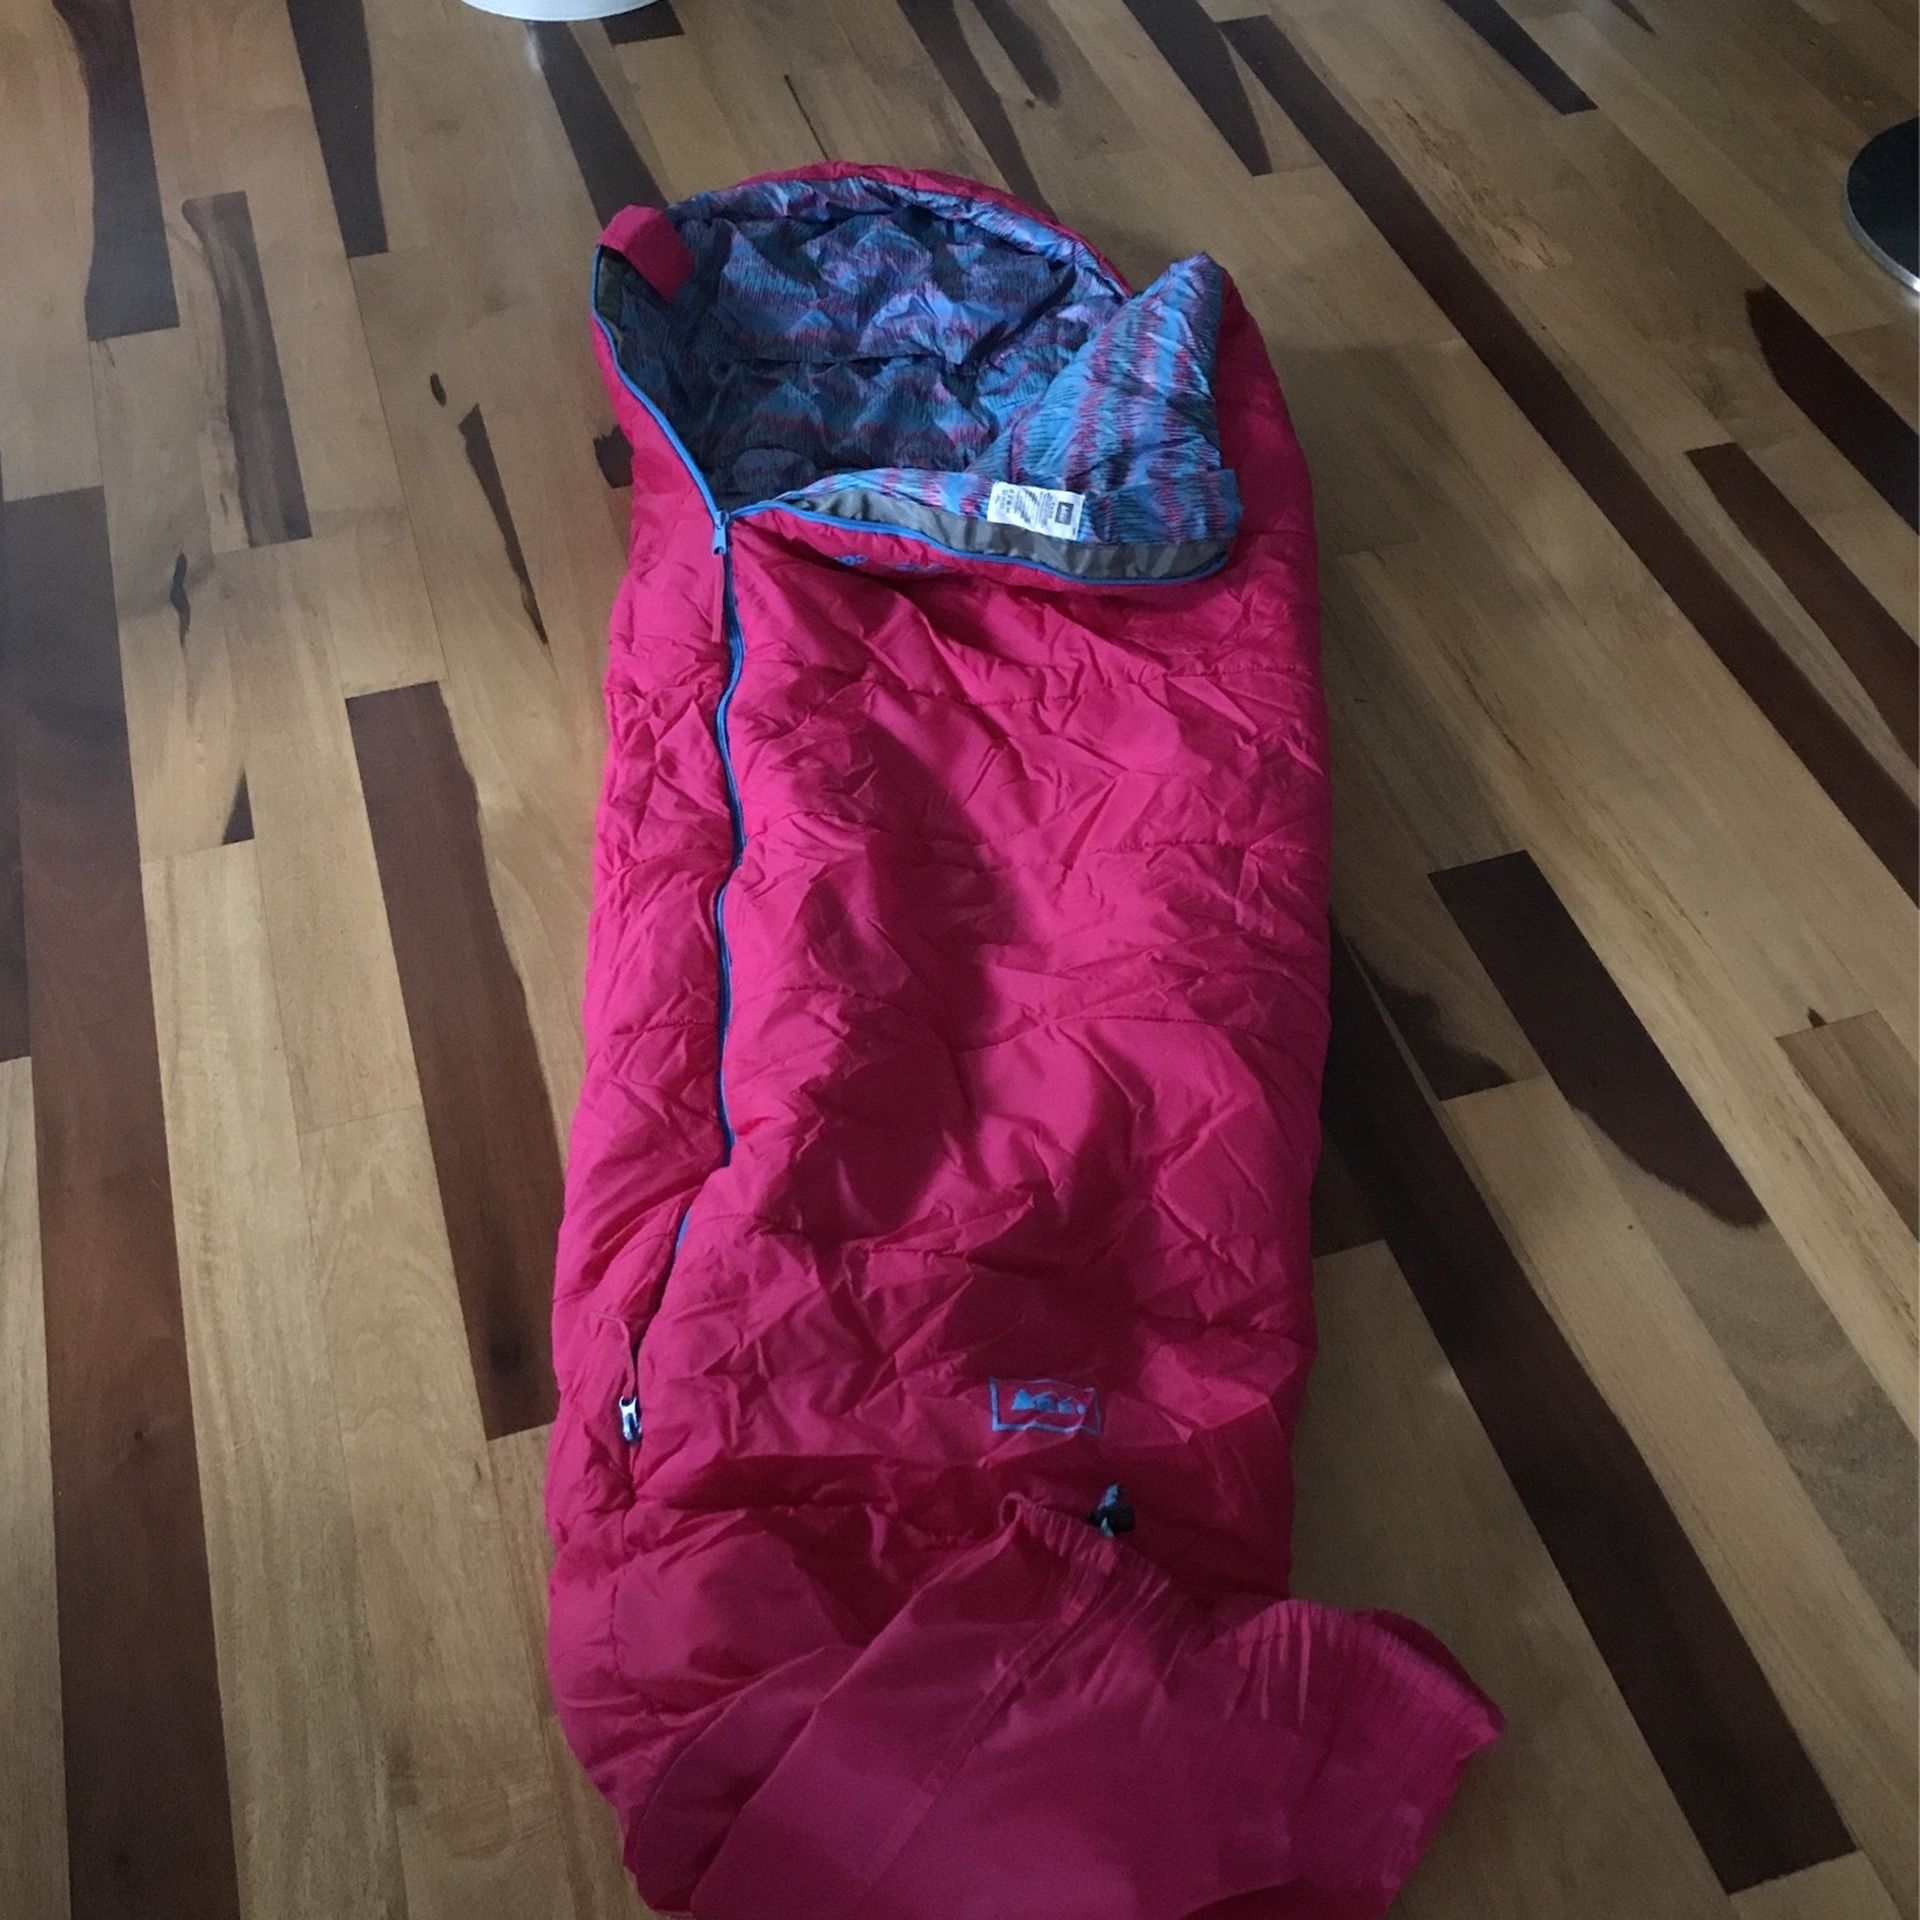 REI Kindercone Sleeping Bag, Great Condition